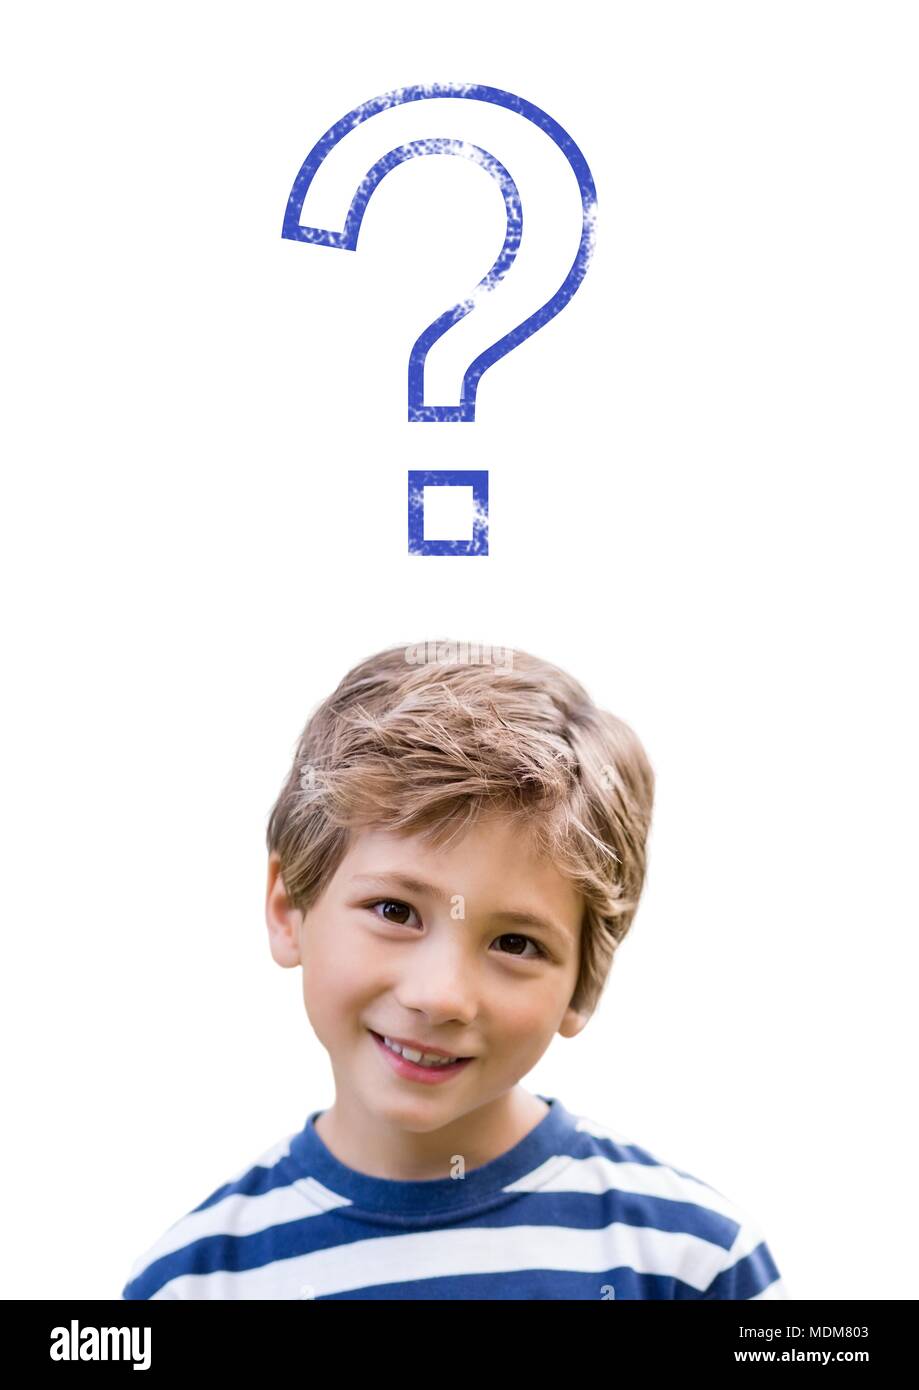 Kid Boy with stencil question mark Stock Photo - Alamy